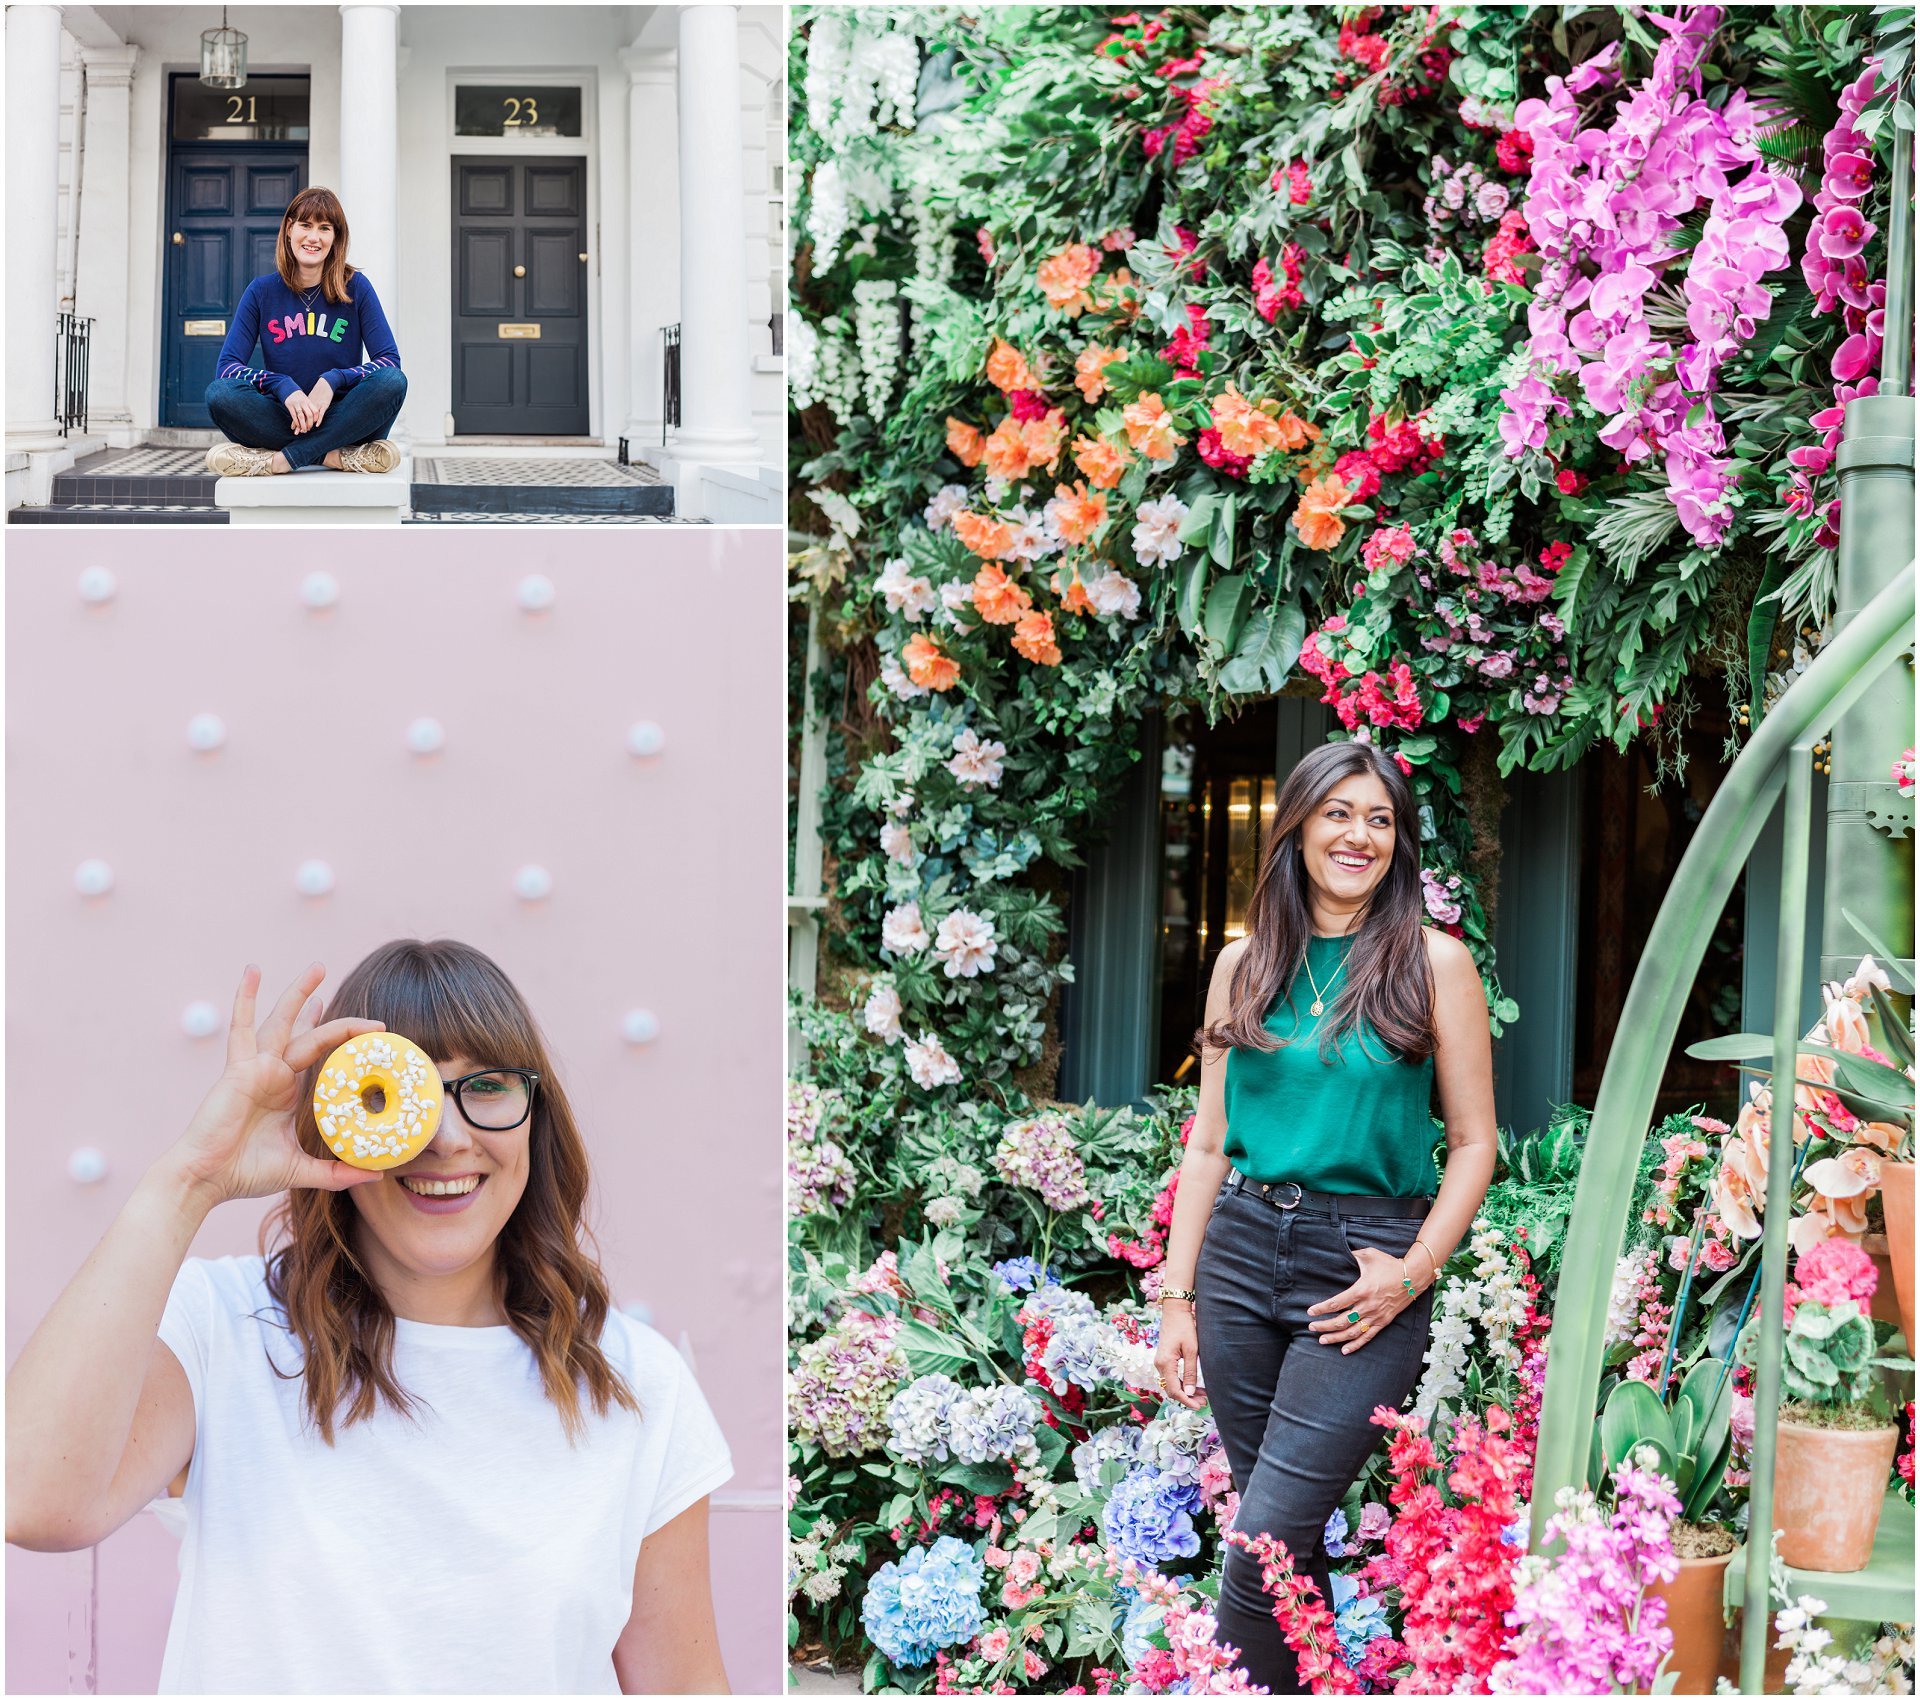 Summer seasonal mini shoots in London with female entrepreneurs. Taken by London branding photographer AKP Branding Stories